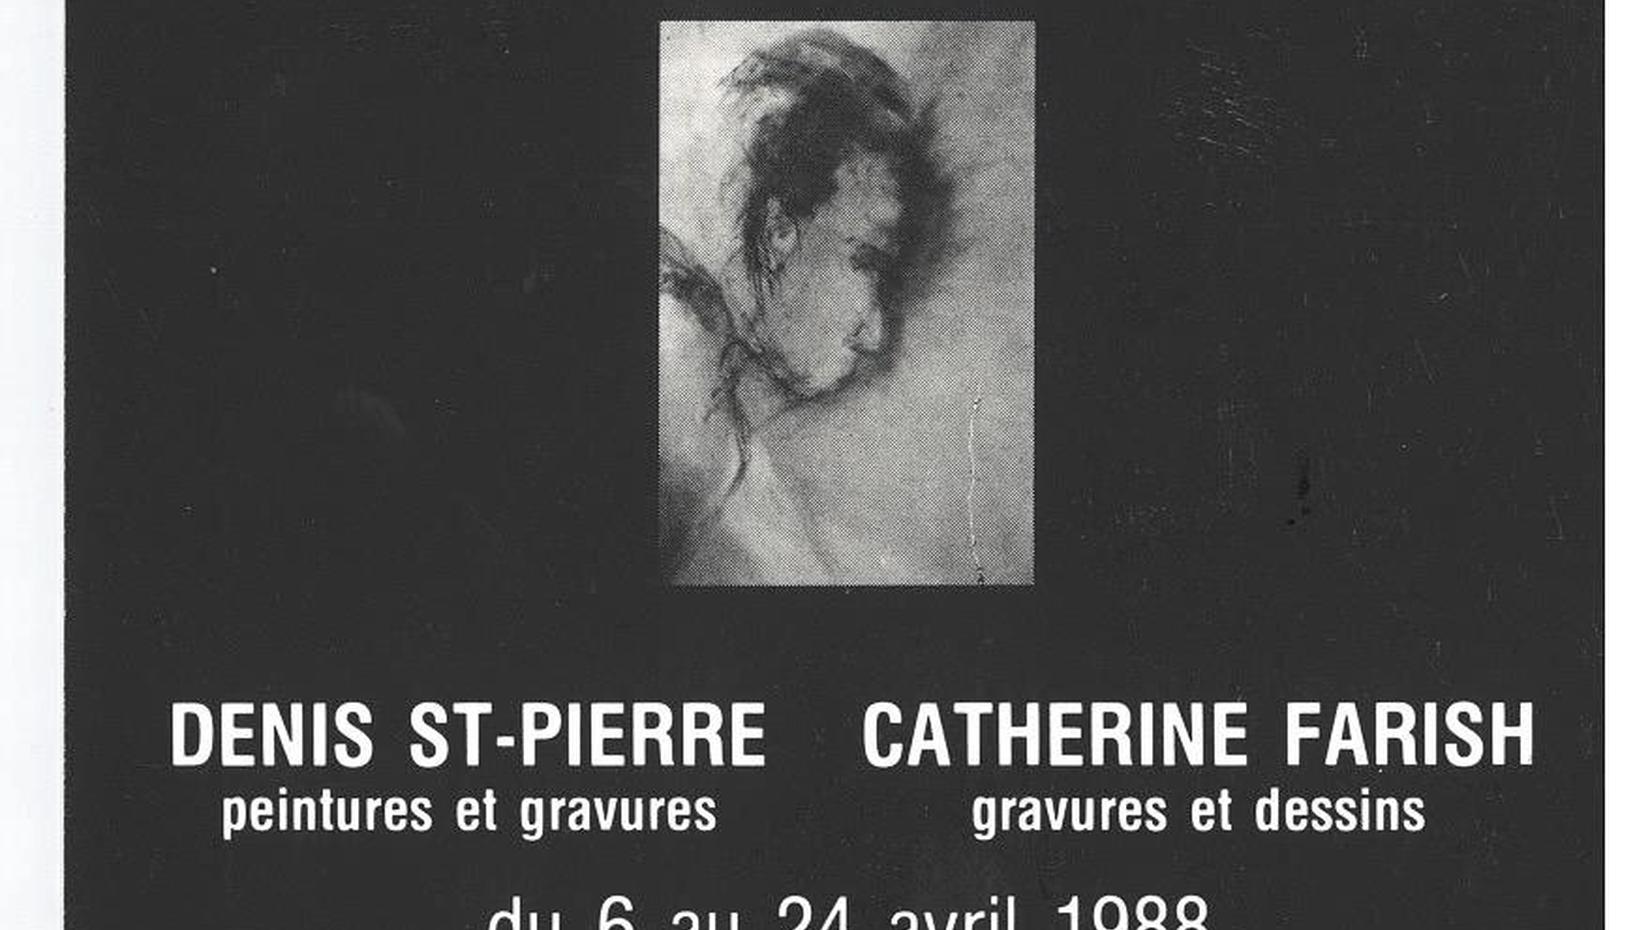 Catherine Farish and Denis St-Pierre